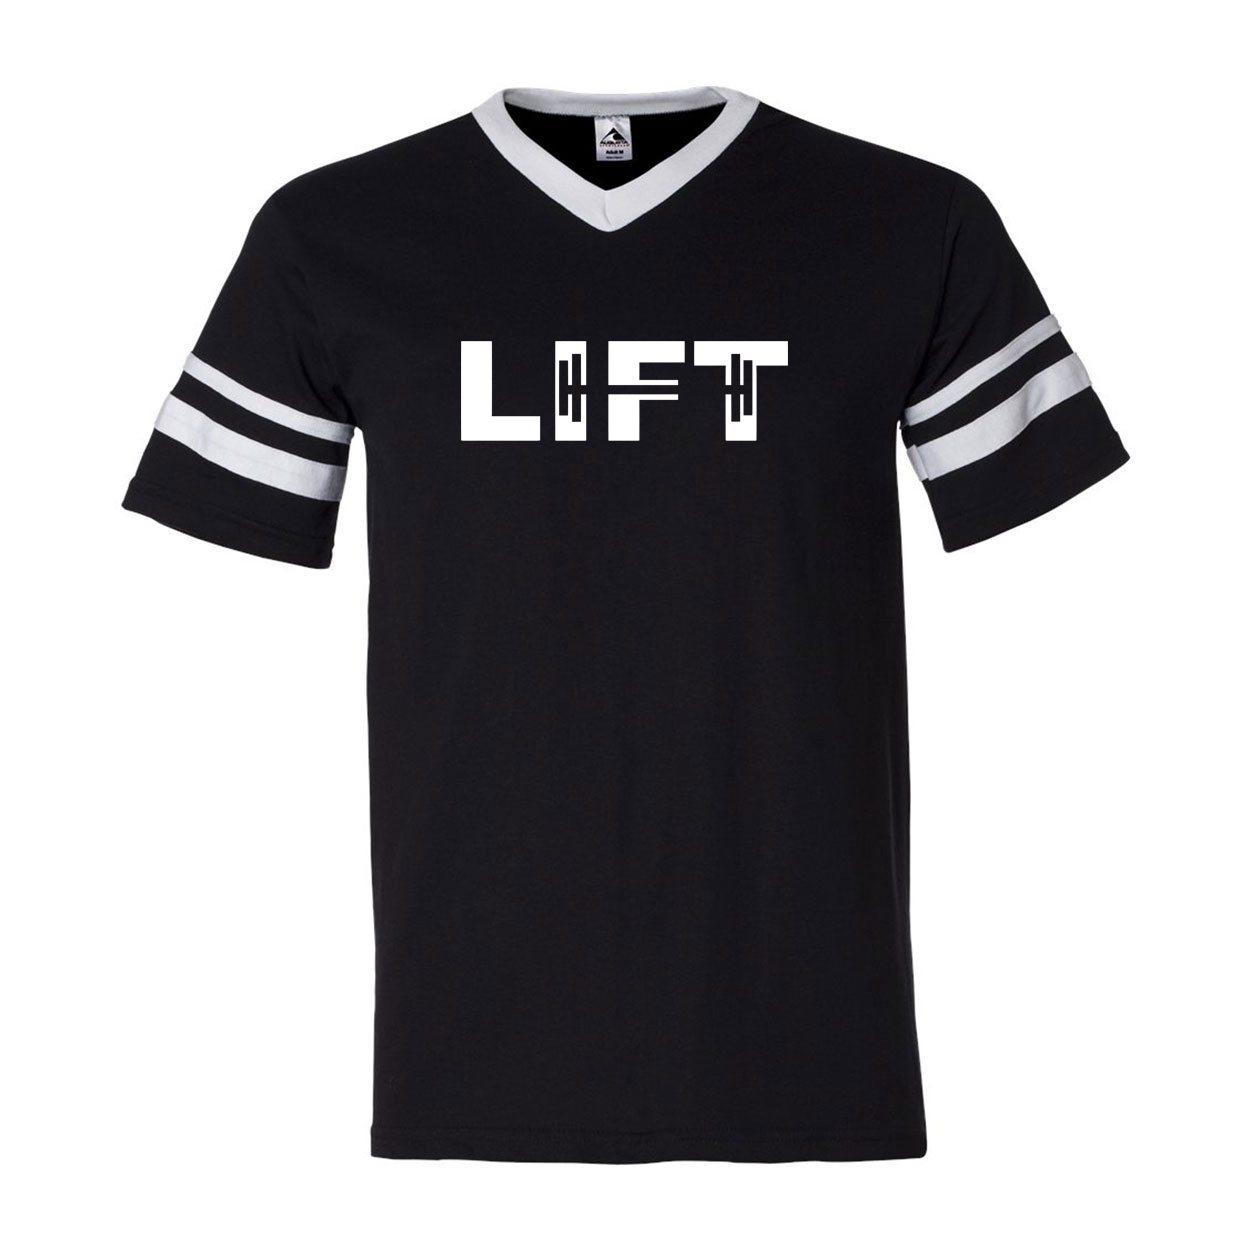 Lift Barbell Logo Classic Premium Striped Jersey T-Shirt Black/White (White Logo)